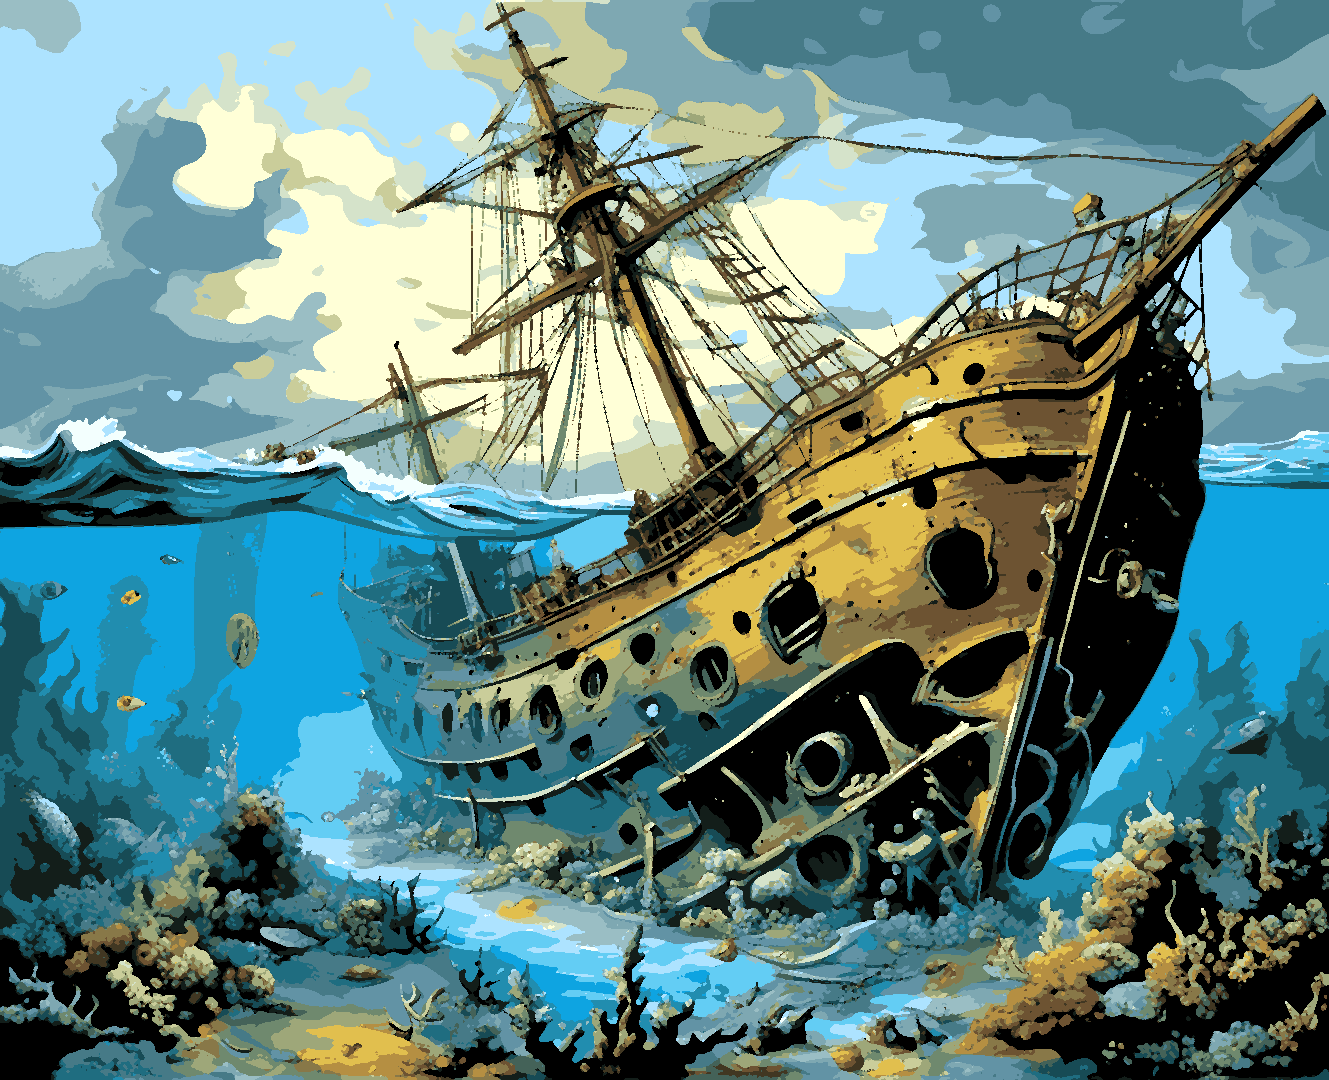 Sunken Shipwreck (1) - Van-Go Paint-By-Number Kit